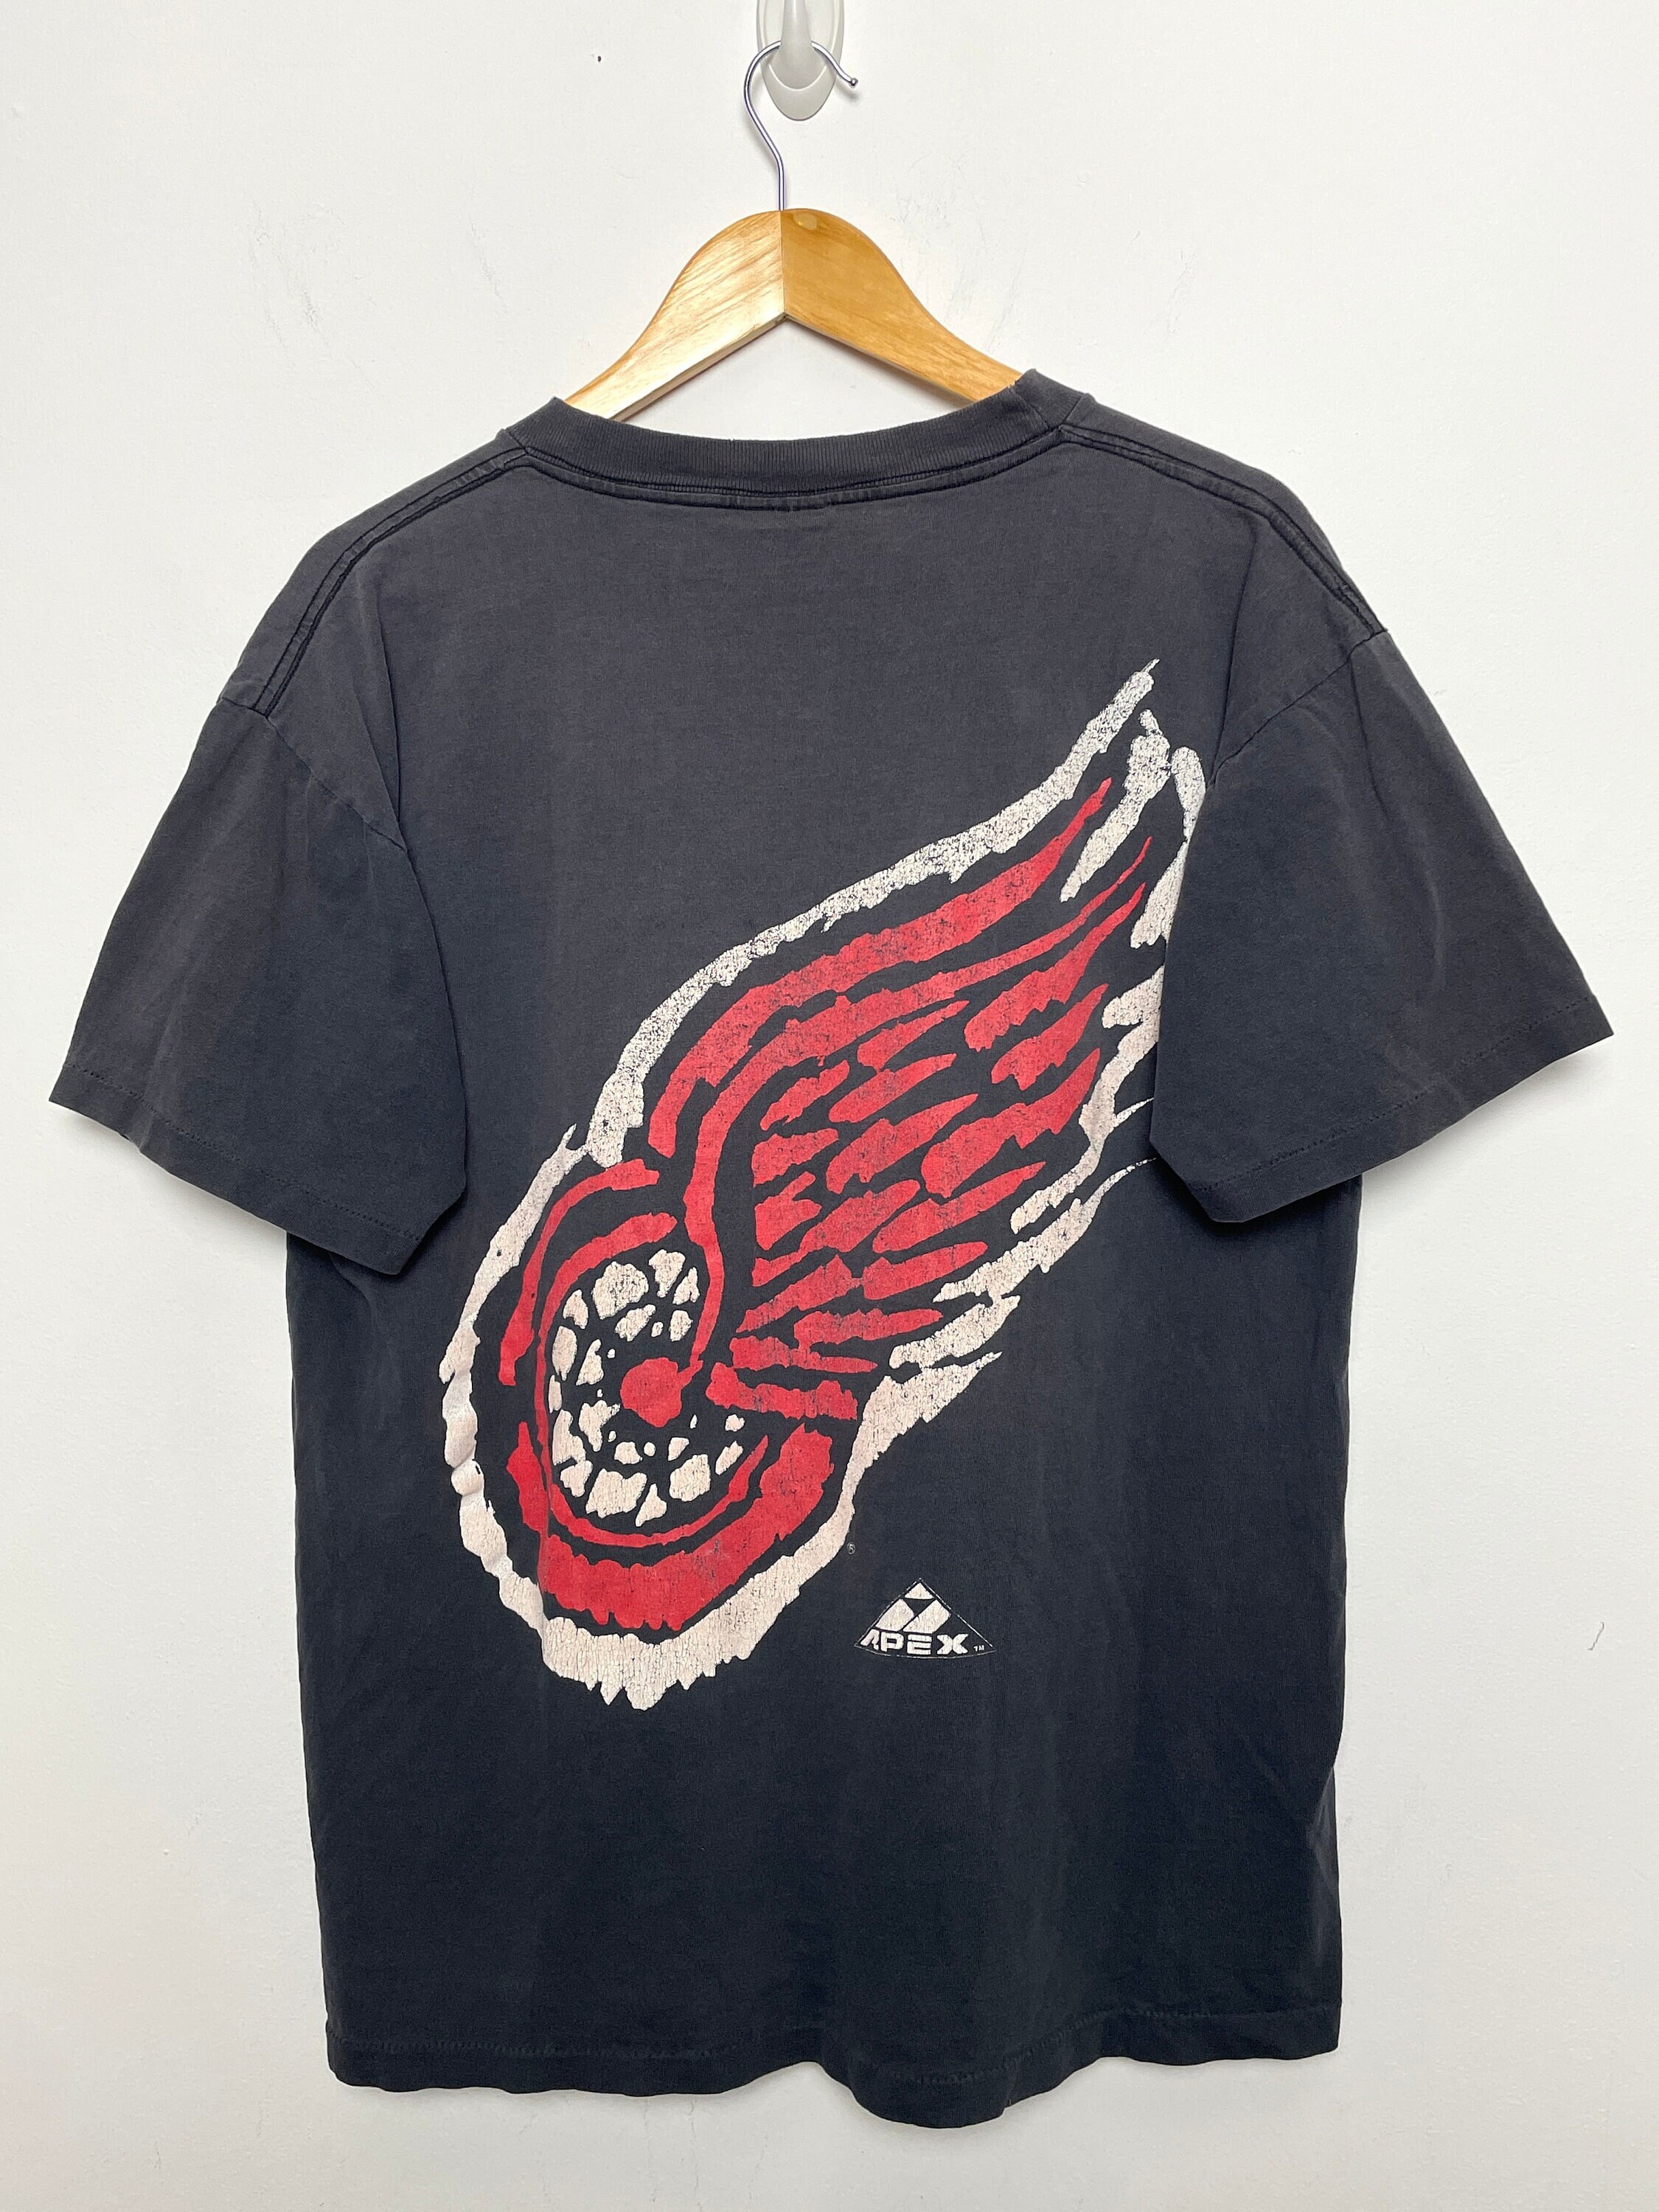 Pin by JasonC ツ on Vintage Hockey  Detroit red wings, Red wings hockey,  Detroit red wings hockey